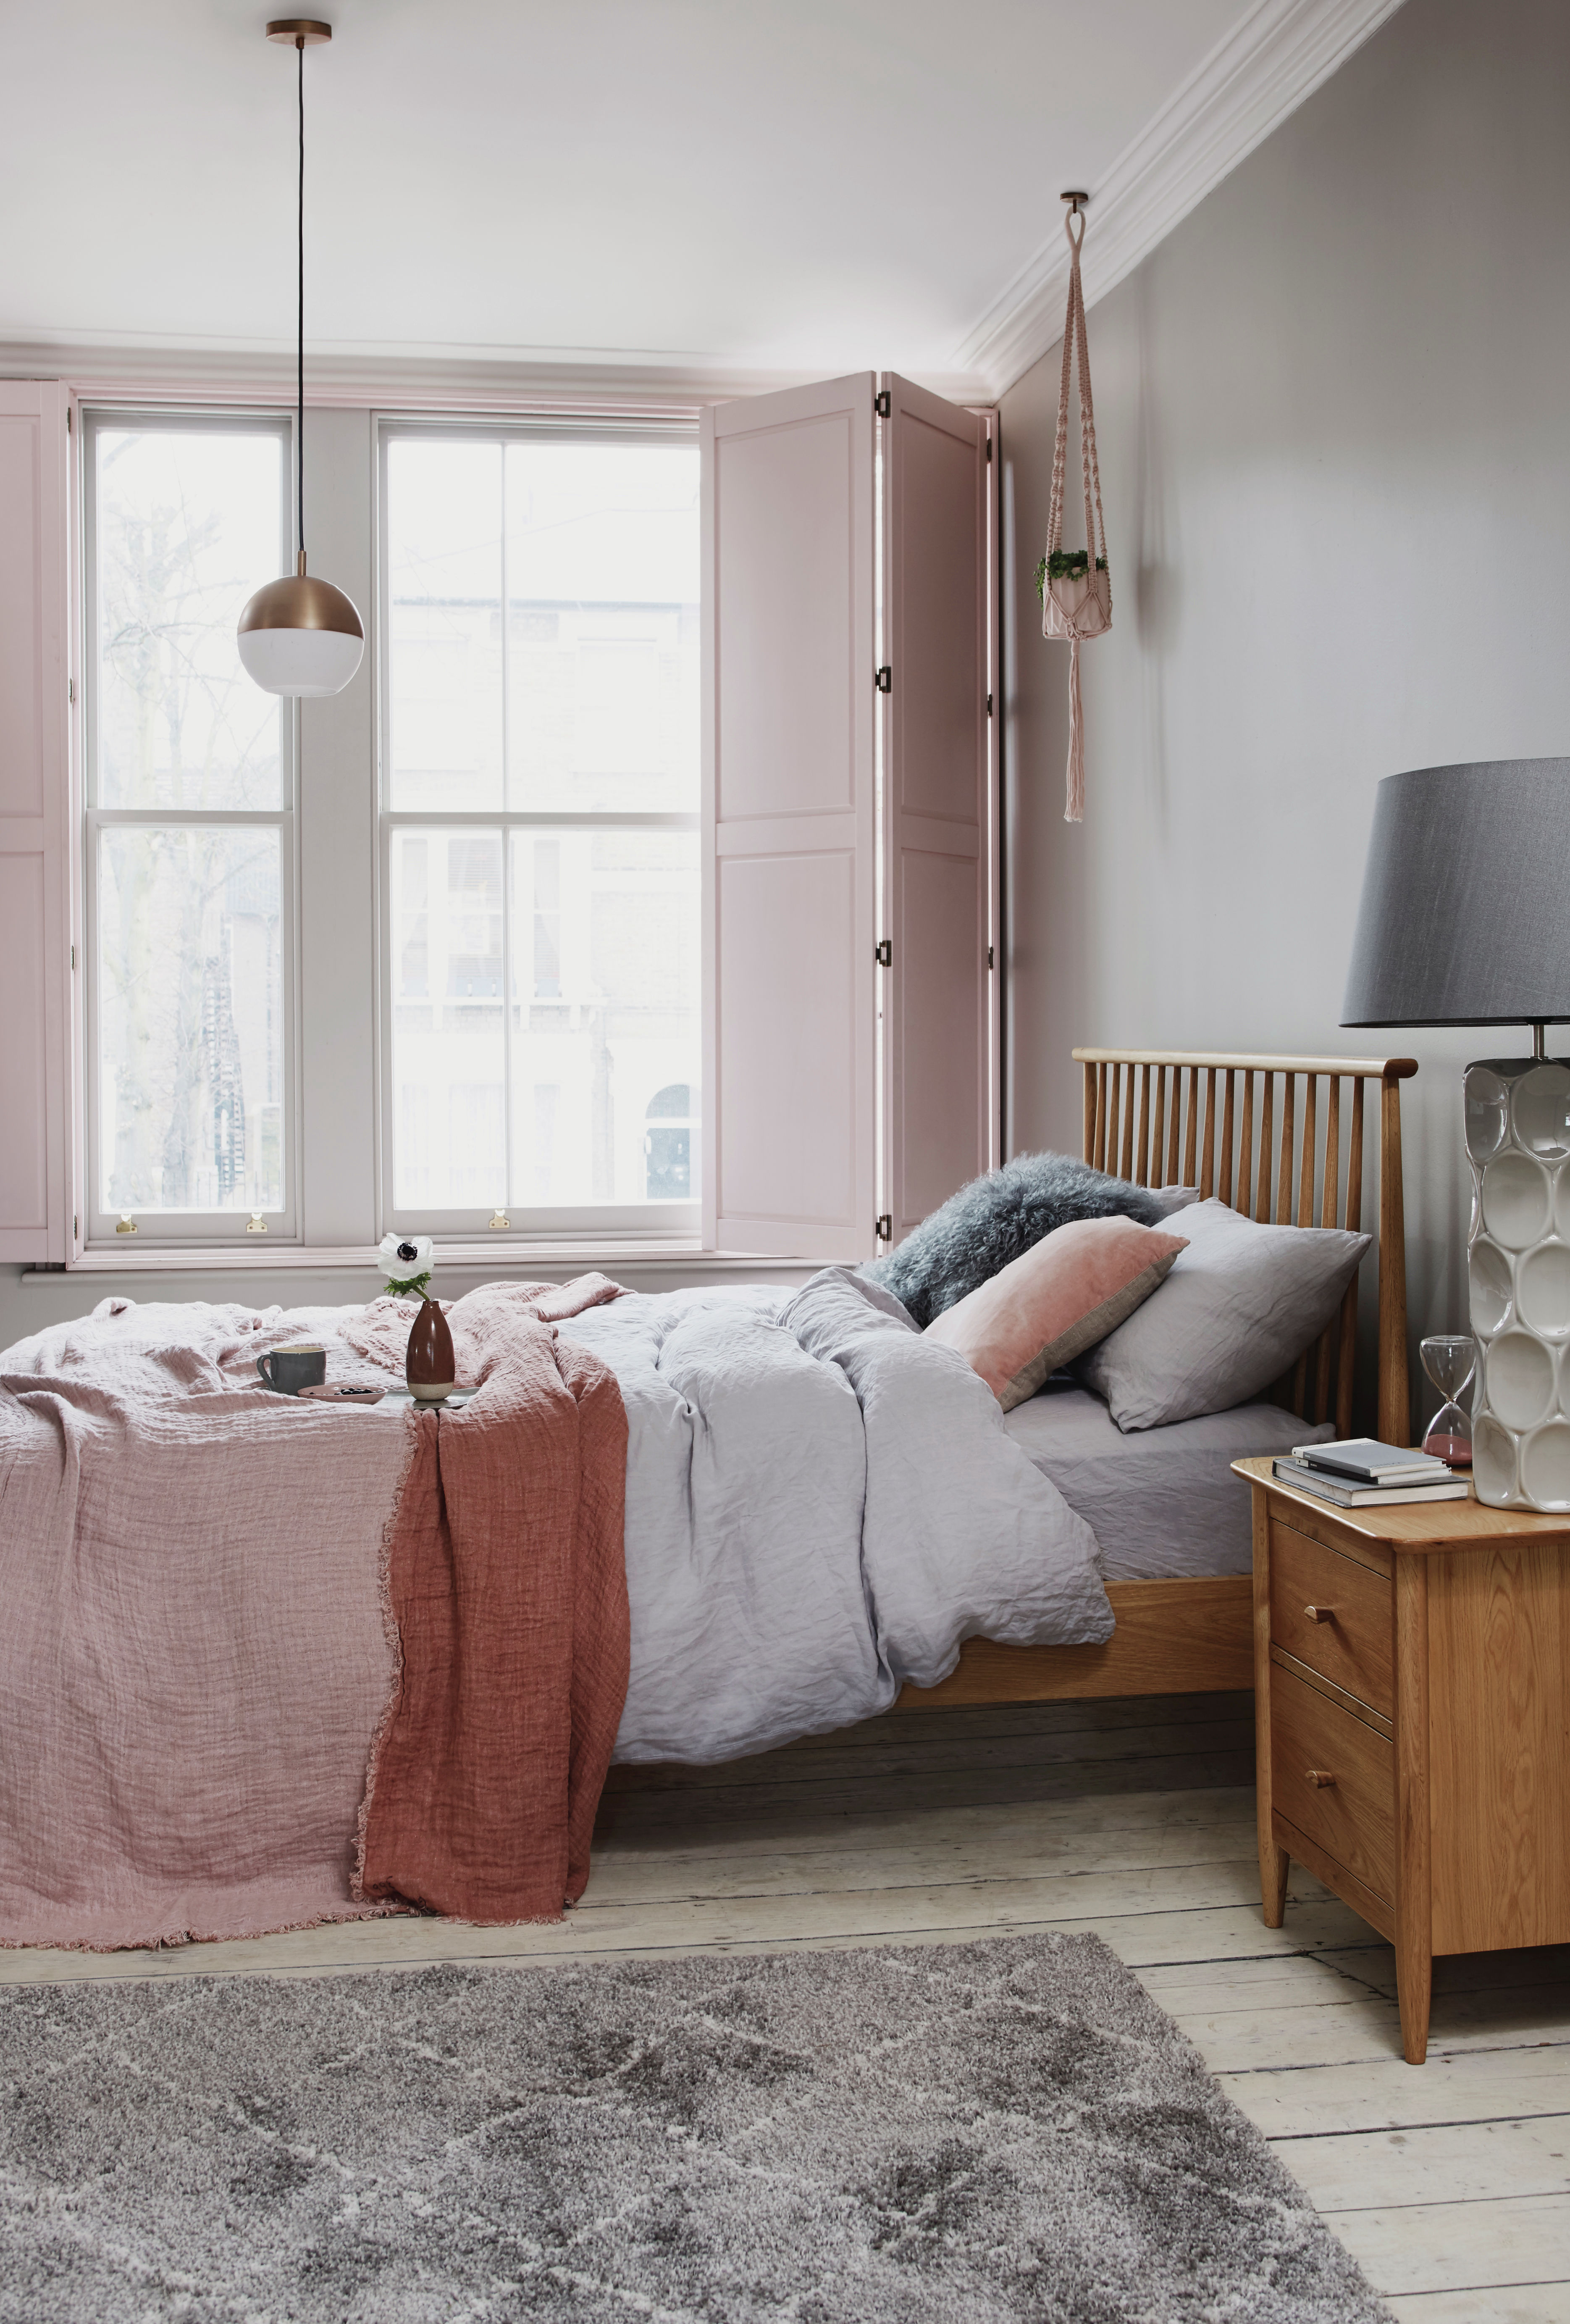 Bedroom ideas by Furniture Village